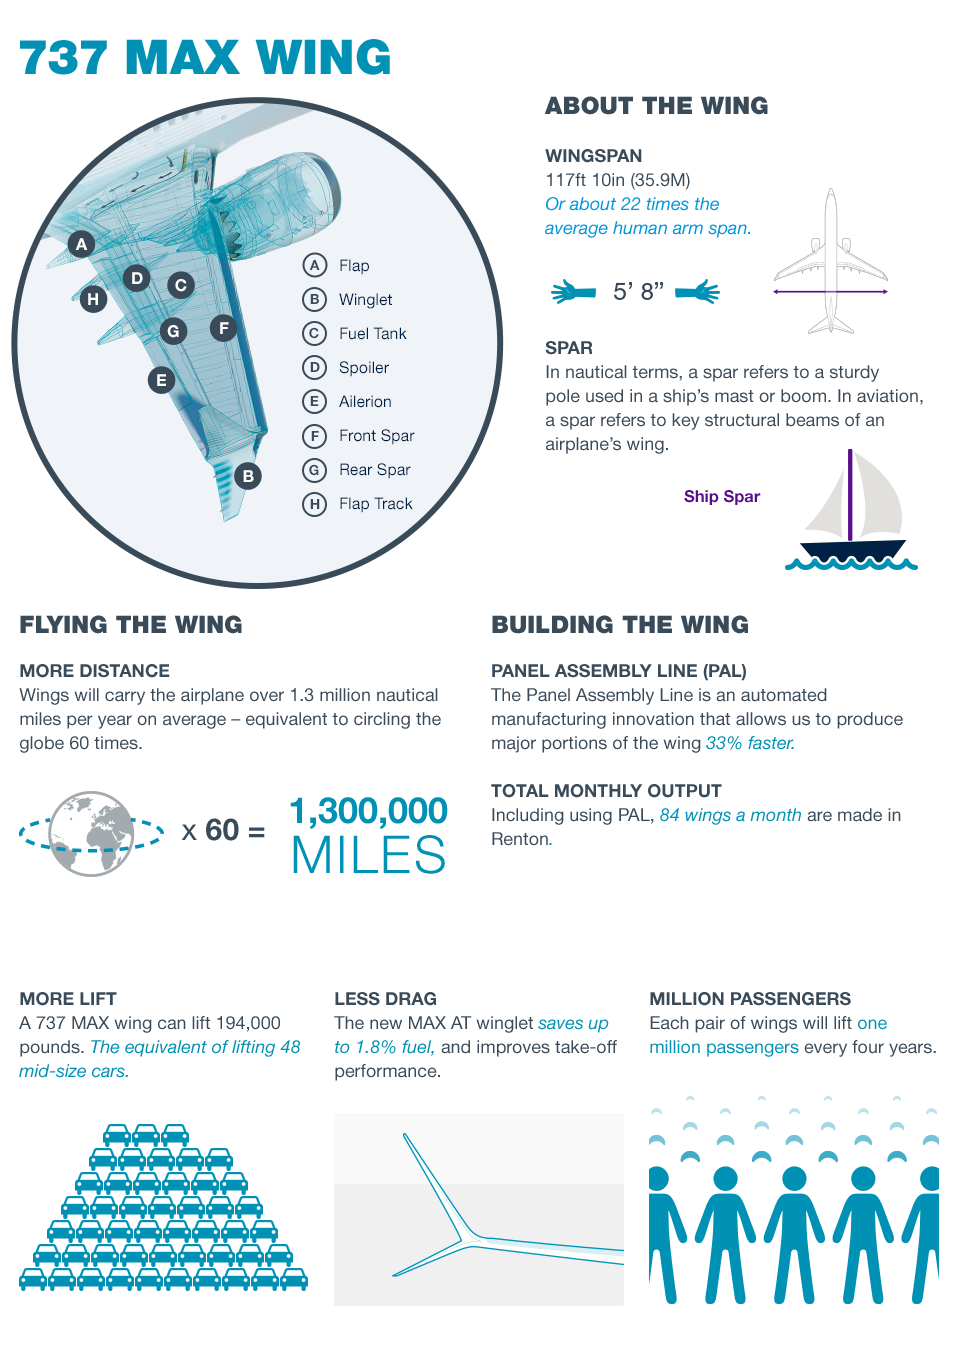 737max-infographic